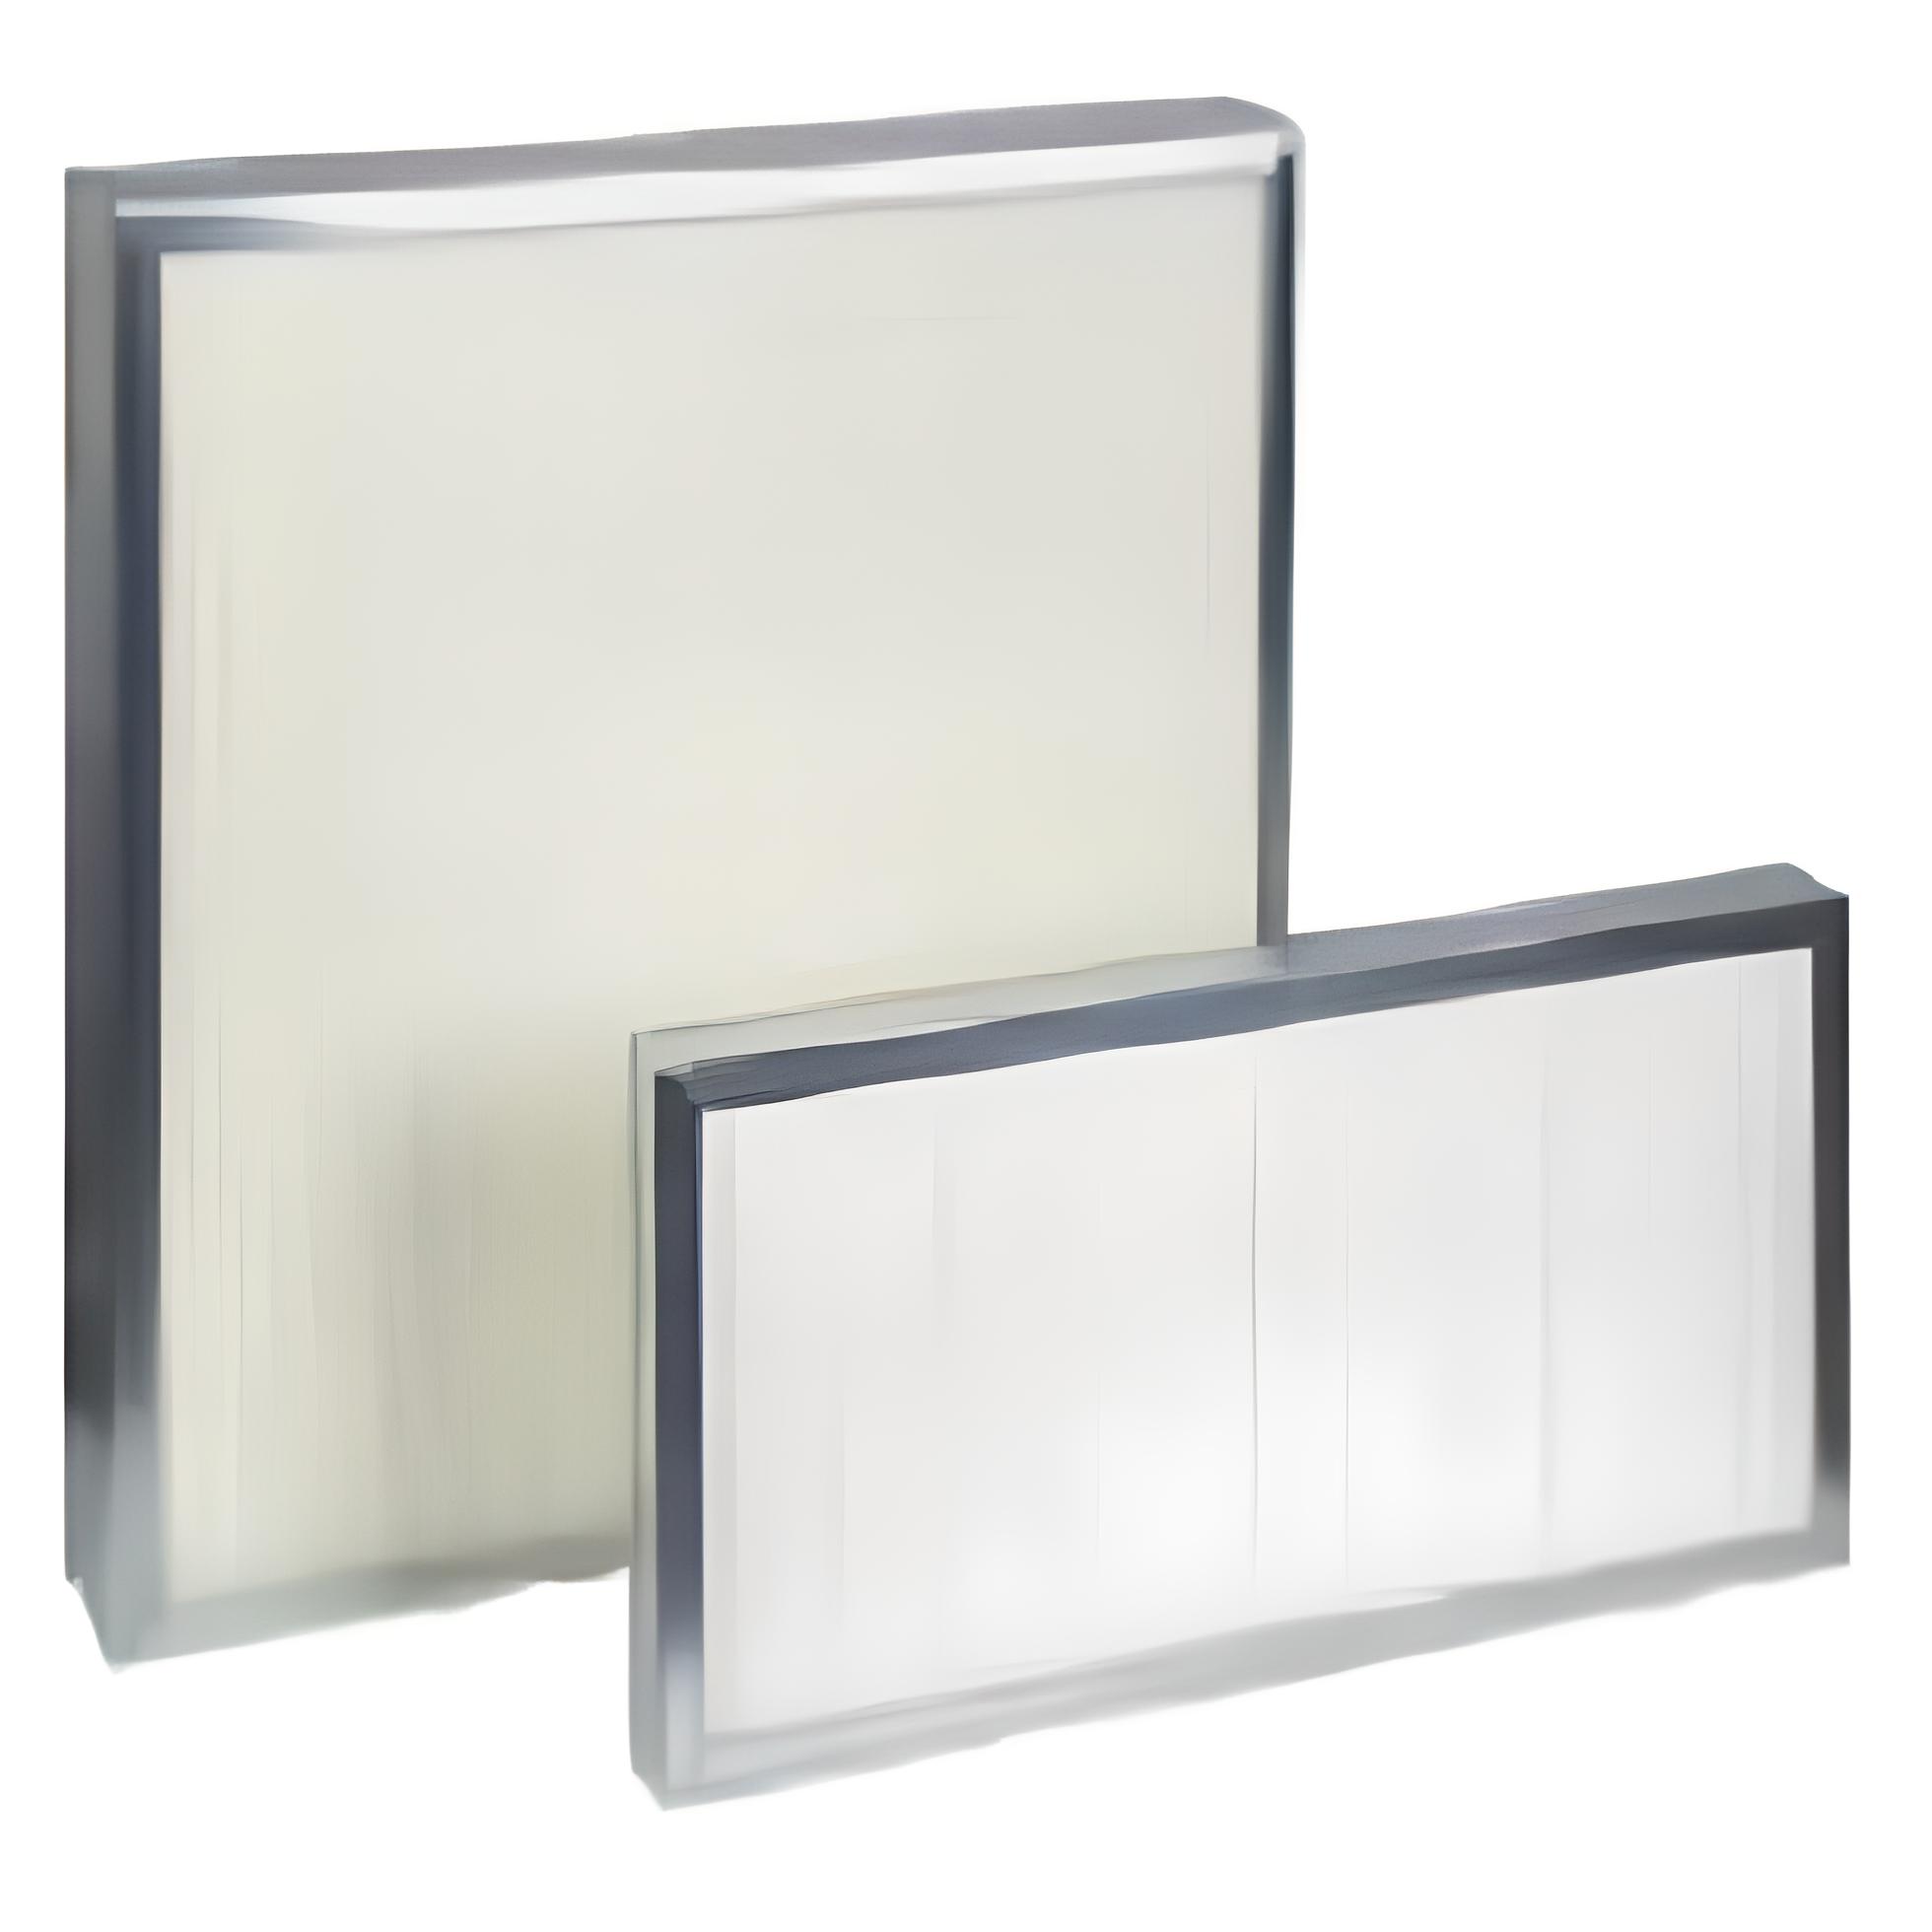  Galvanized Frame Panels